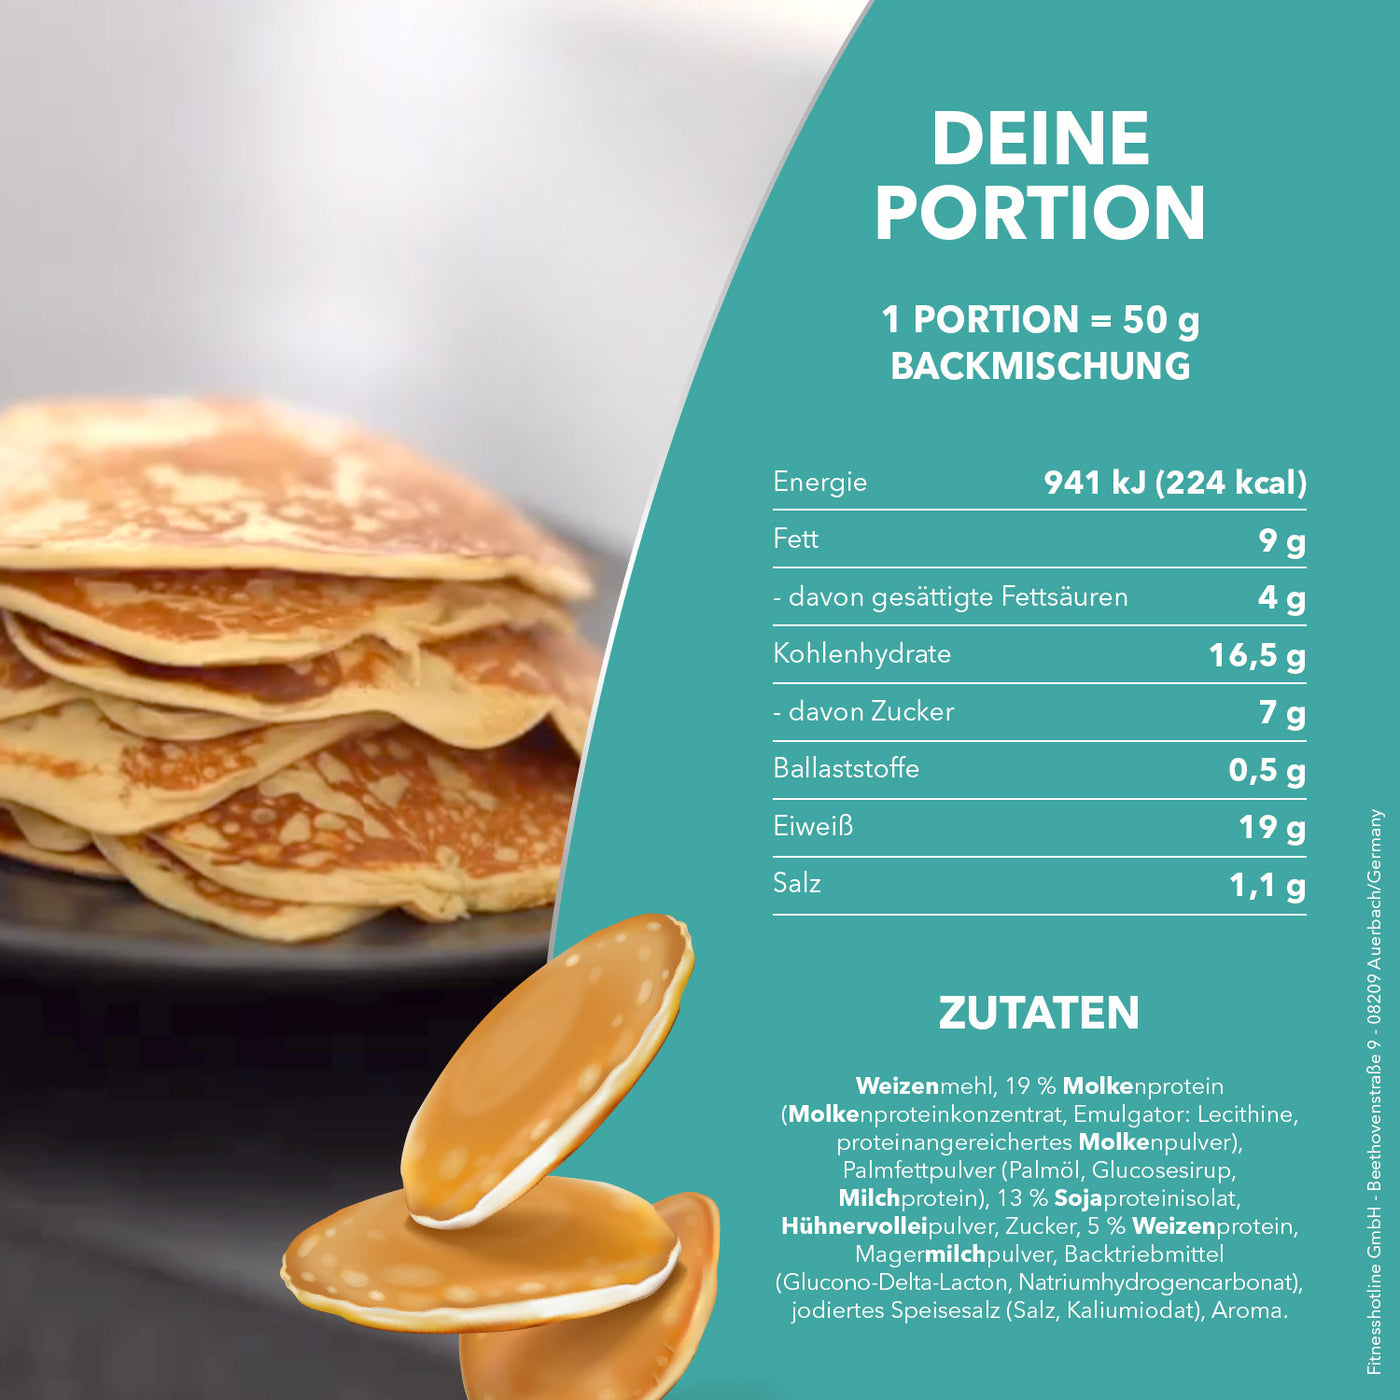 Protein Pancake - Neutral - 1000 g Dose#_